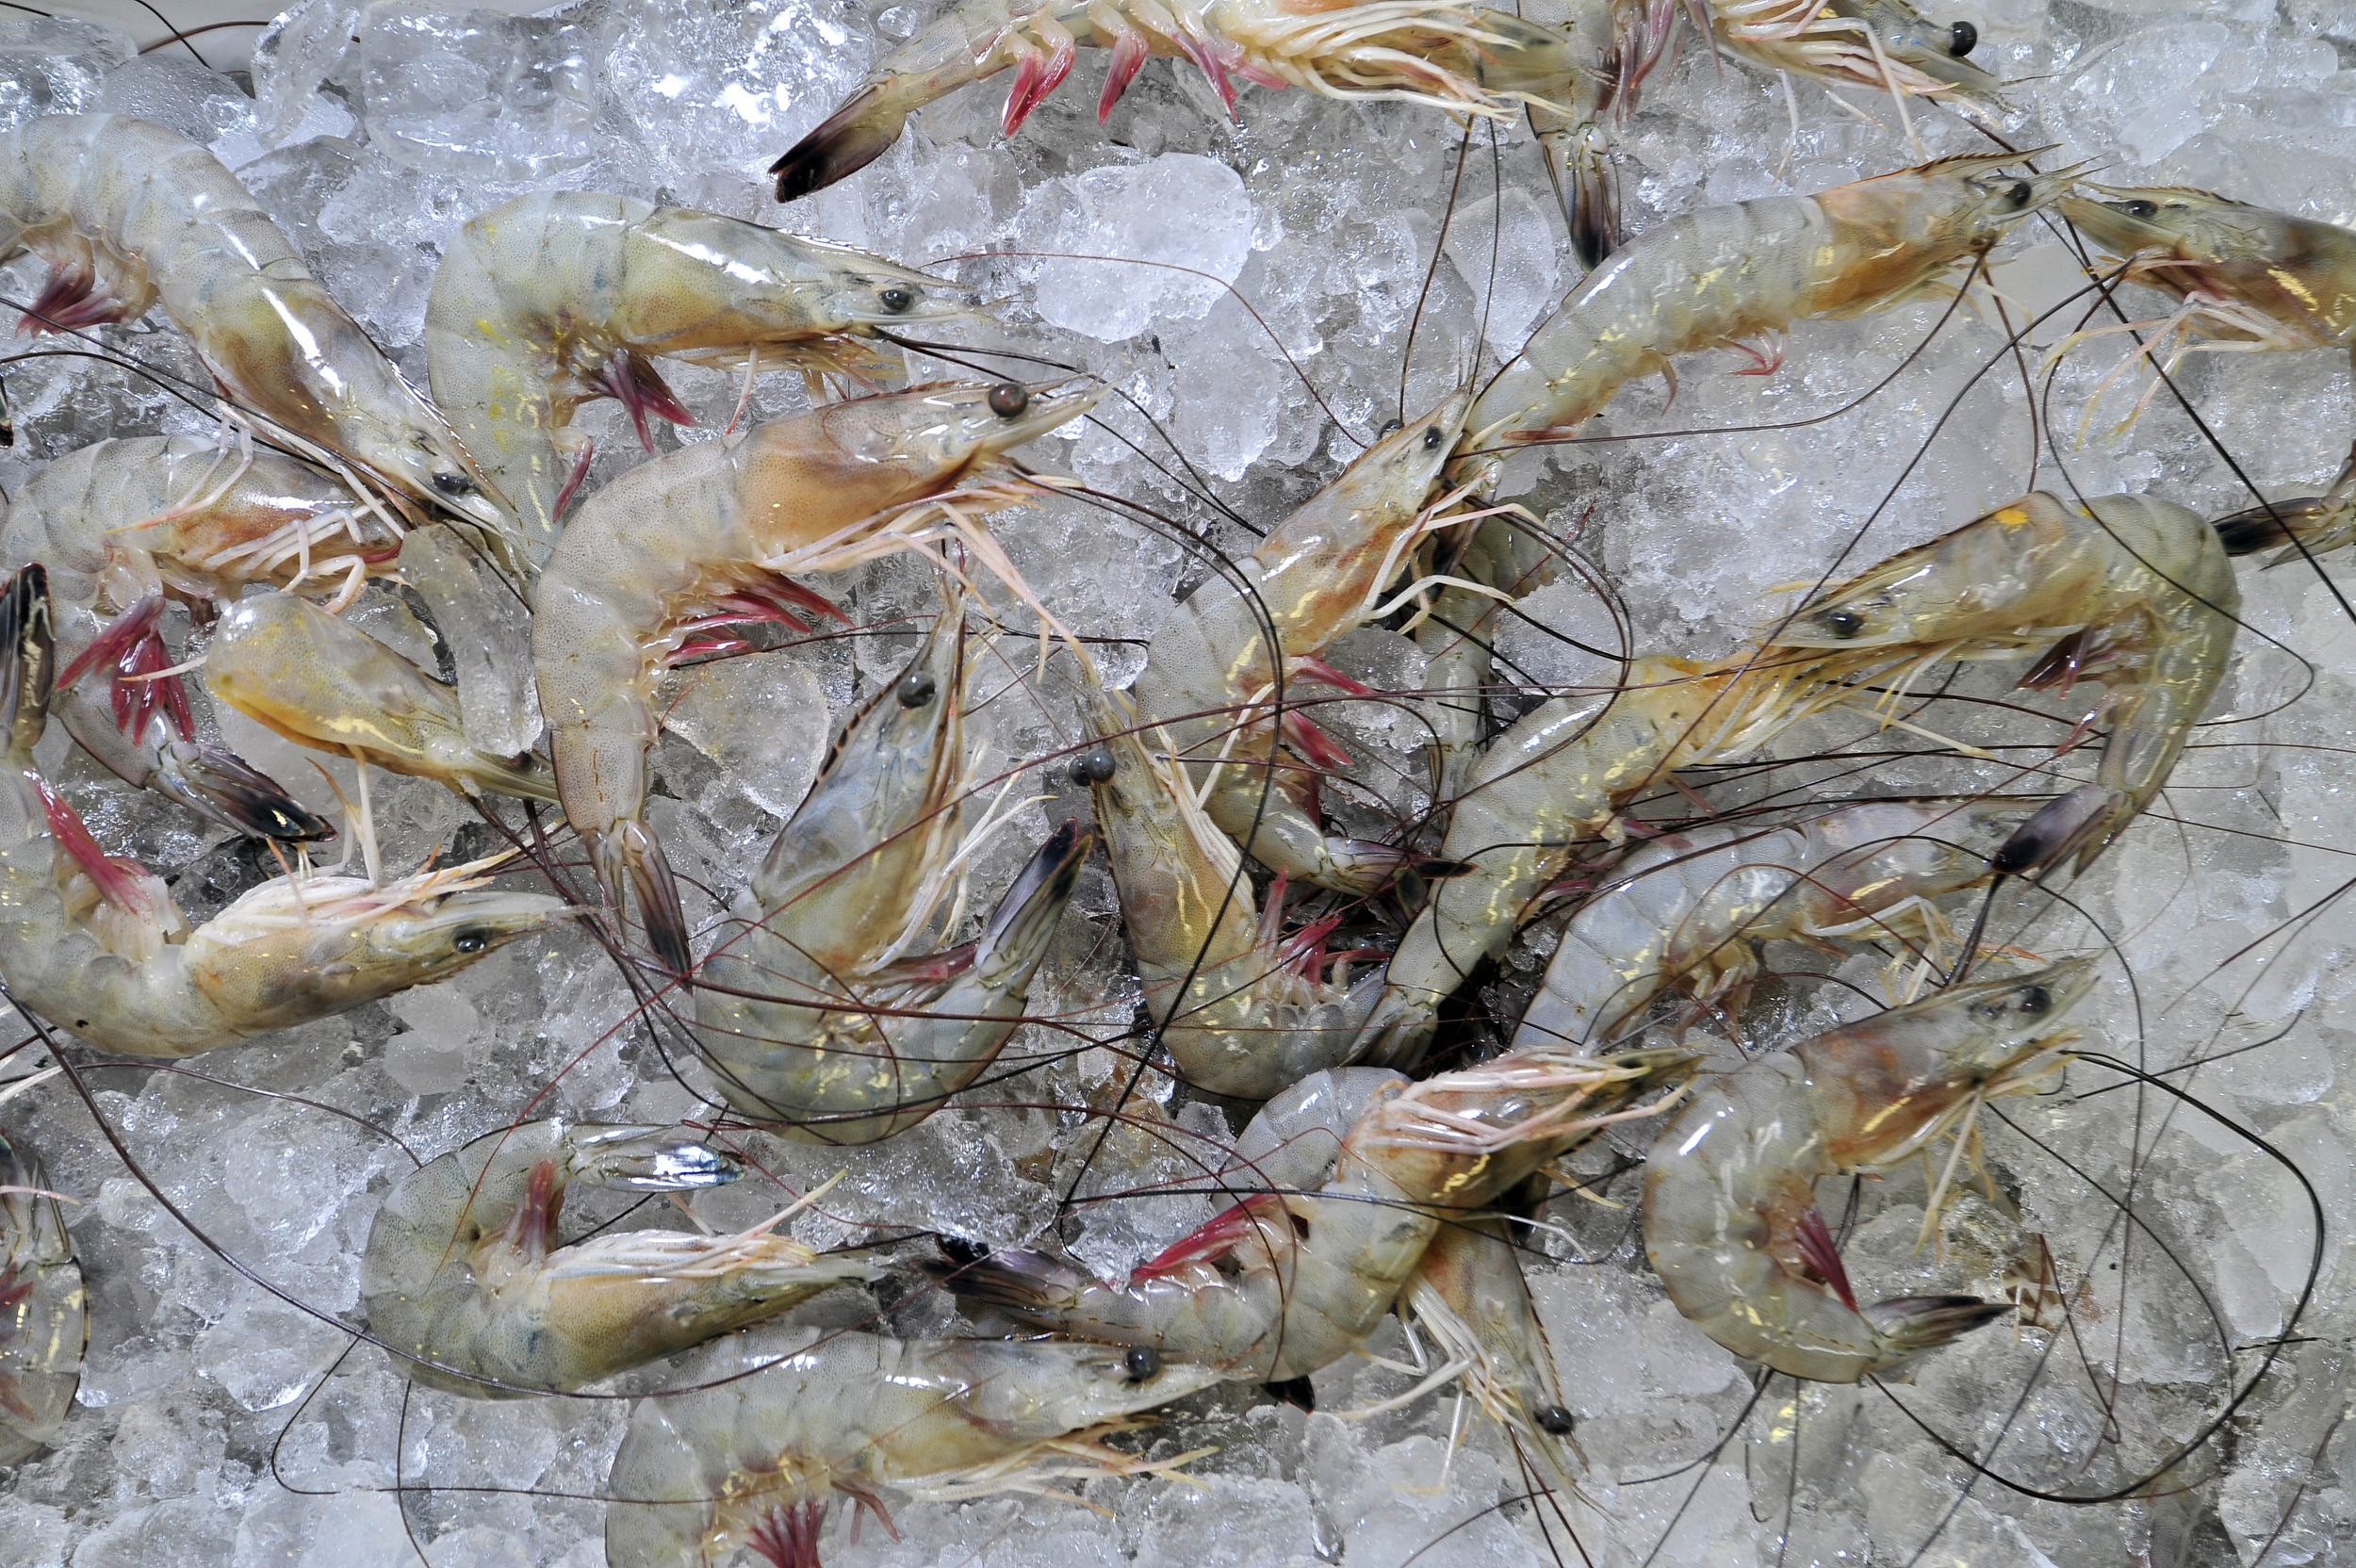  Fresh brown shrimp at Louisiana Seafood Company in Nashville, Tenn. 